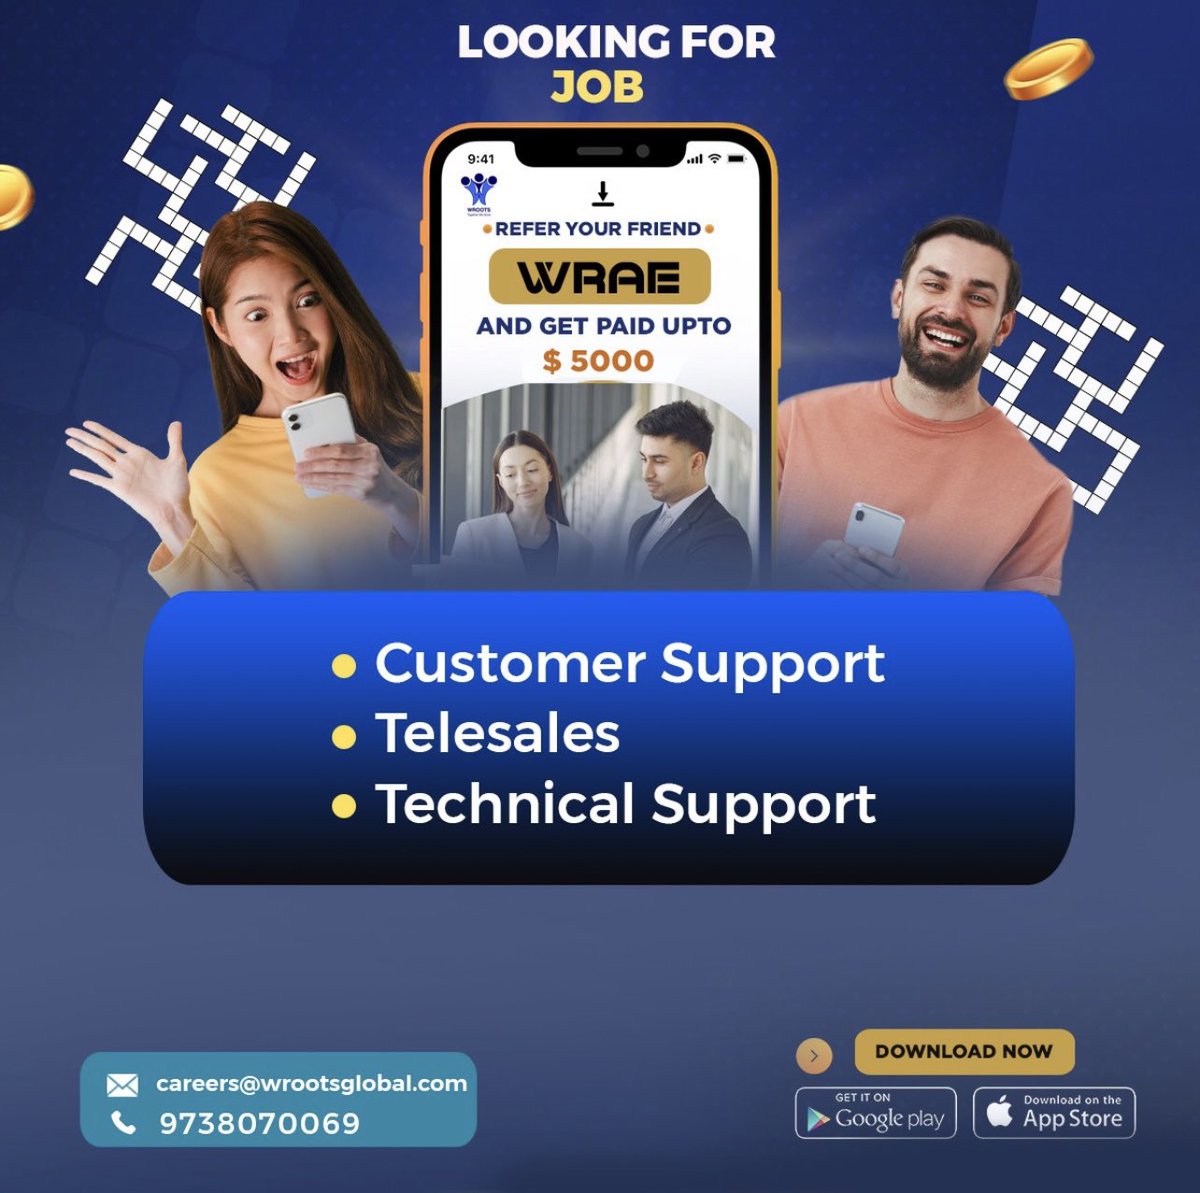 #wroots #callcenters #jobs #freshers #bangalorejobs #bangalorehiring #bangalorejob #voiceprocess #csr #customerservice #telemarketing #telesalesjobs #telesales #referandearn #referafriend